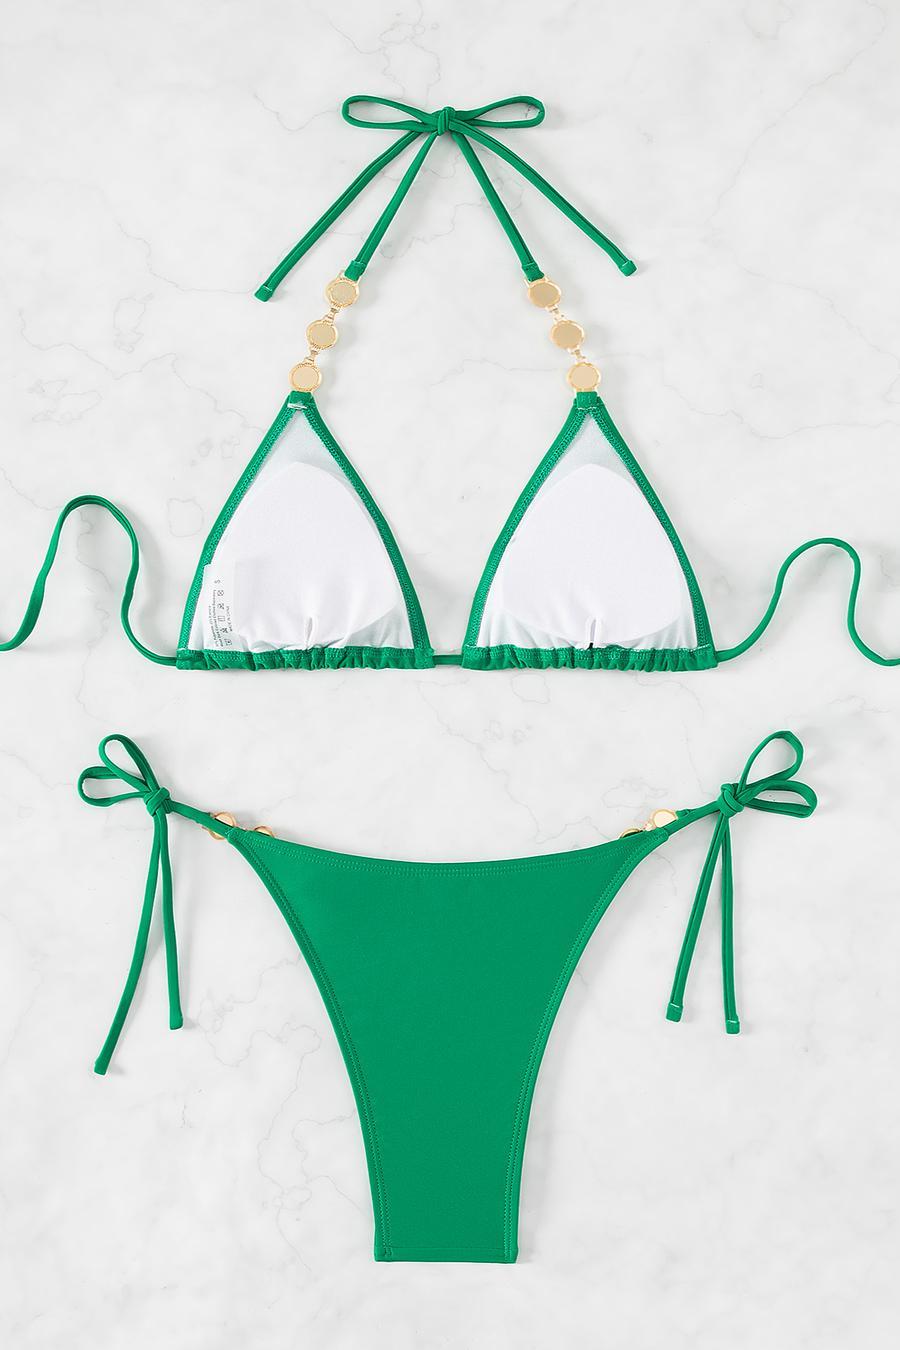 Green Halter Style Bikini with Rhinestones On Top and Bottoms